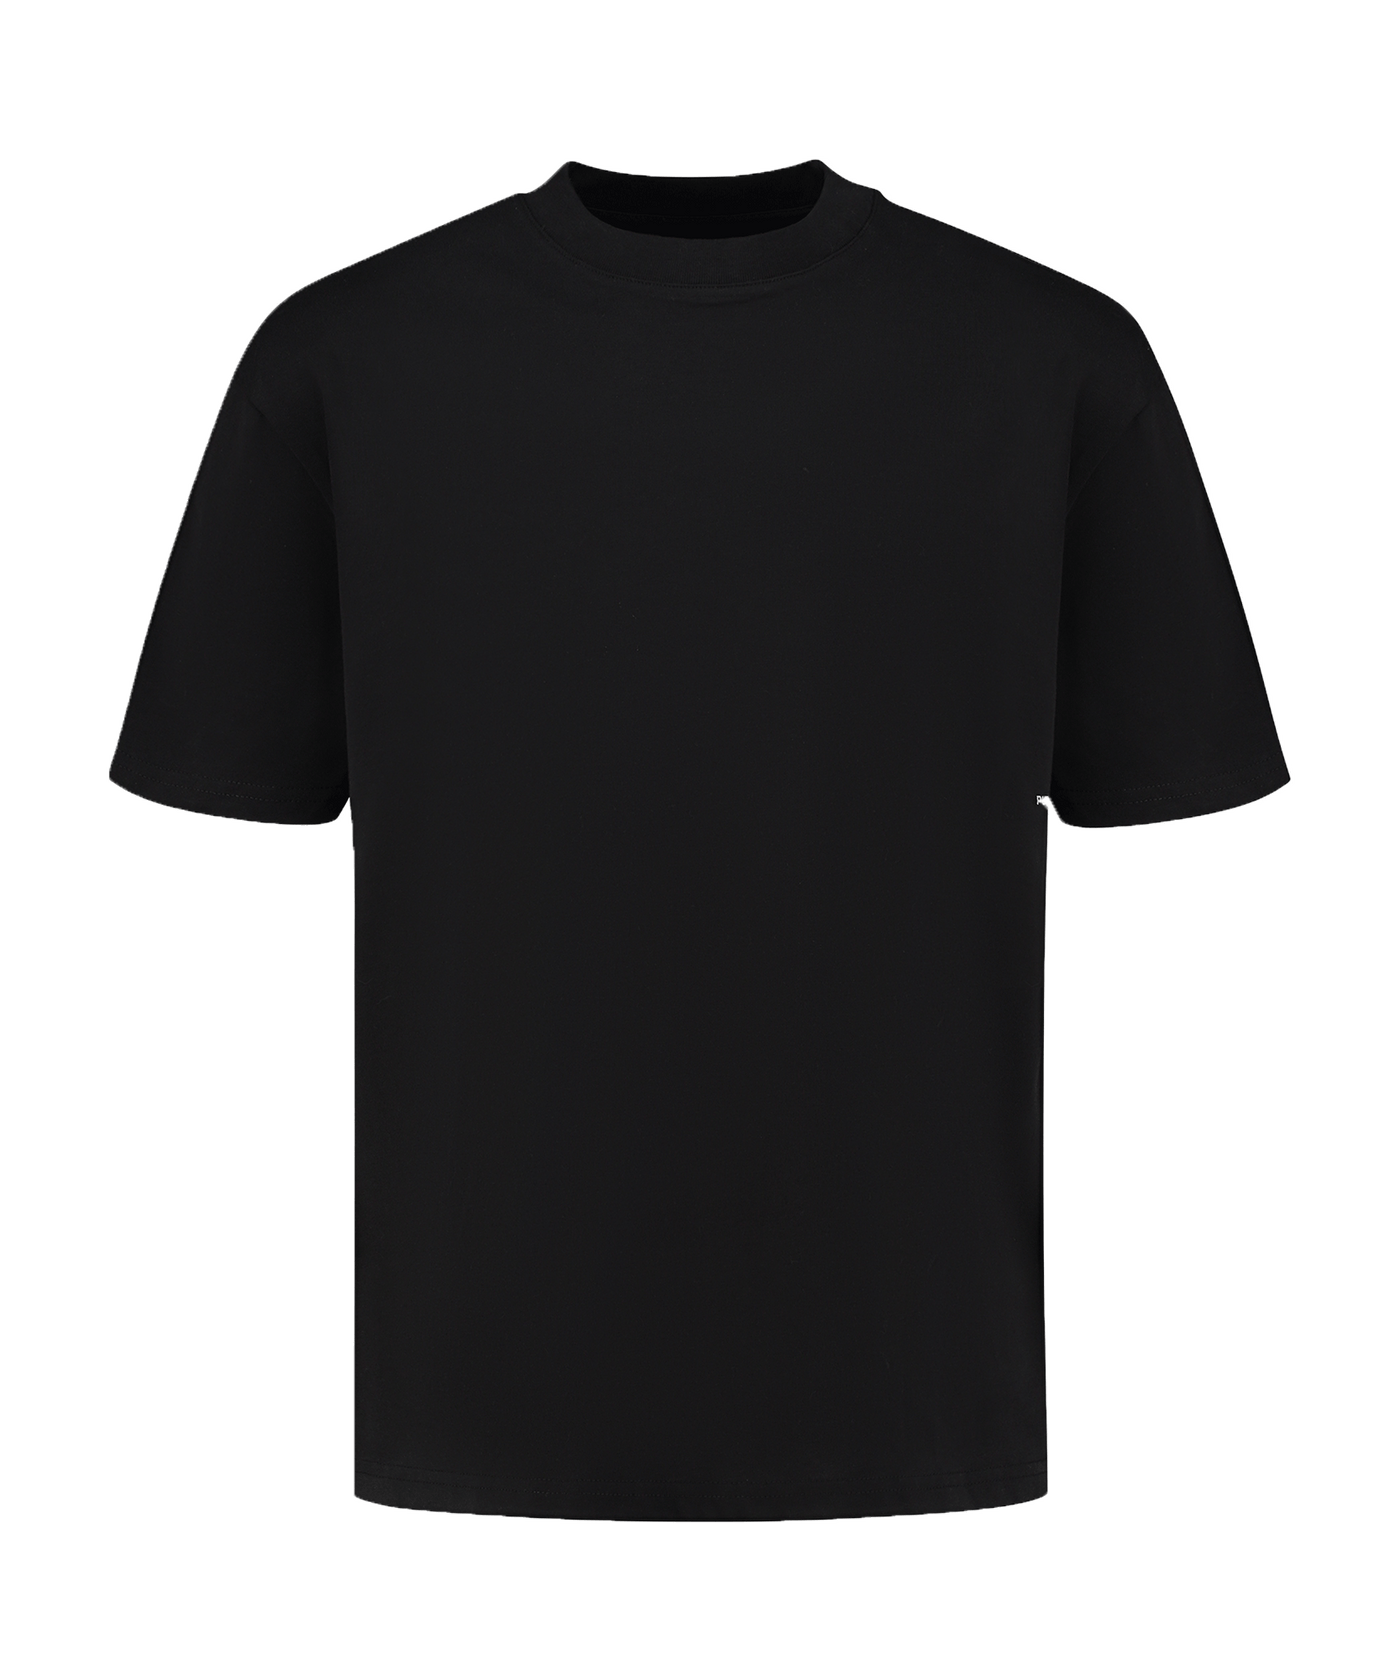 Pure Path - 24010119 - Vintage Back Print T-shirt - Black